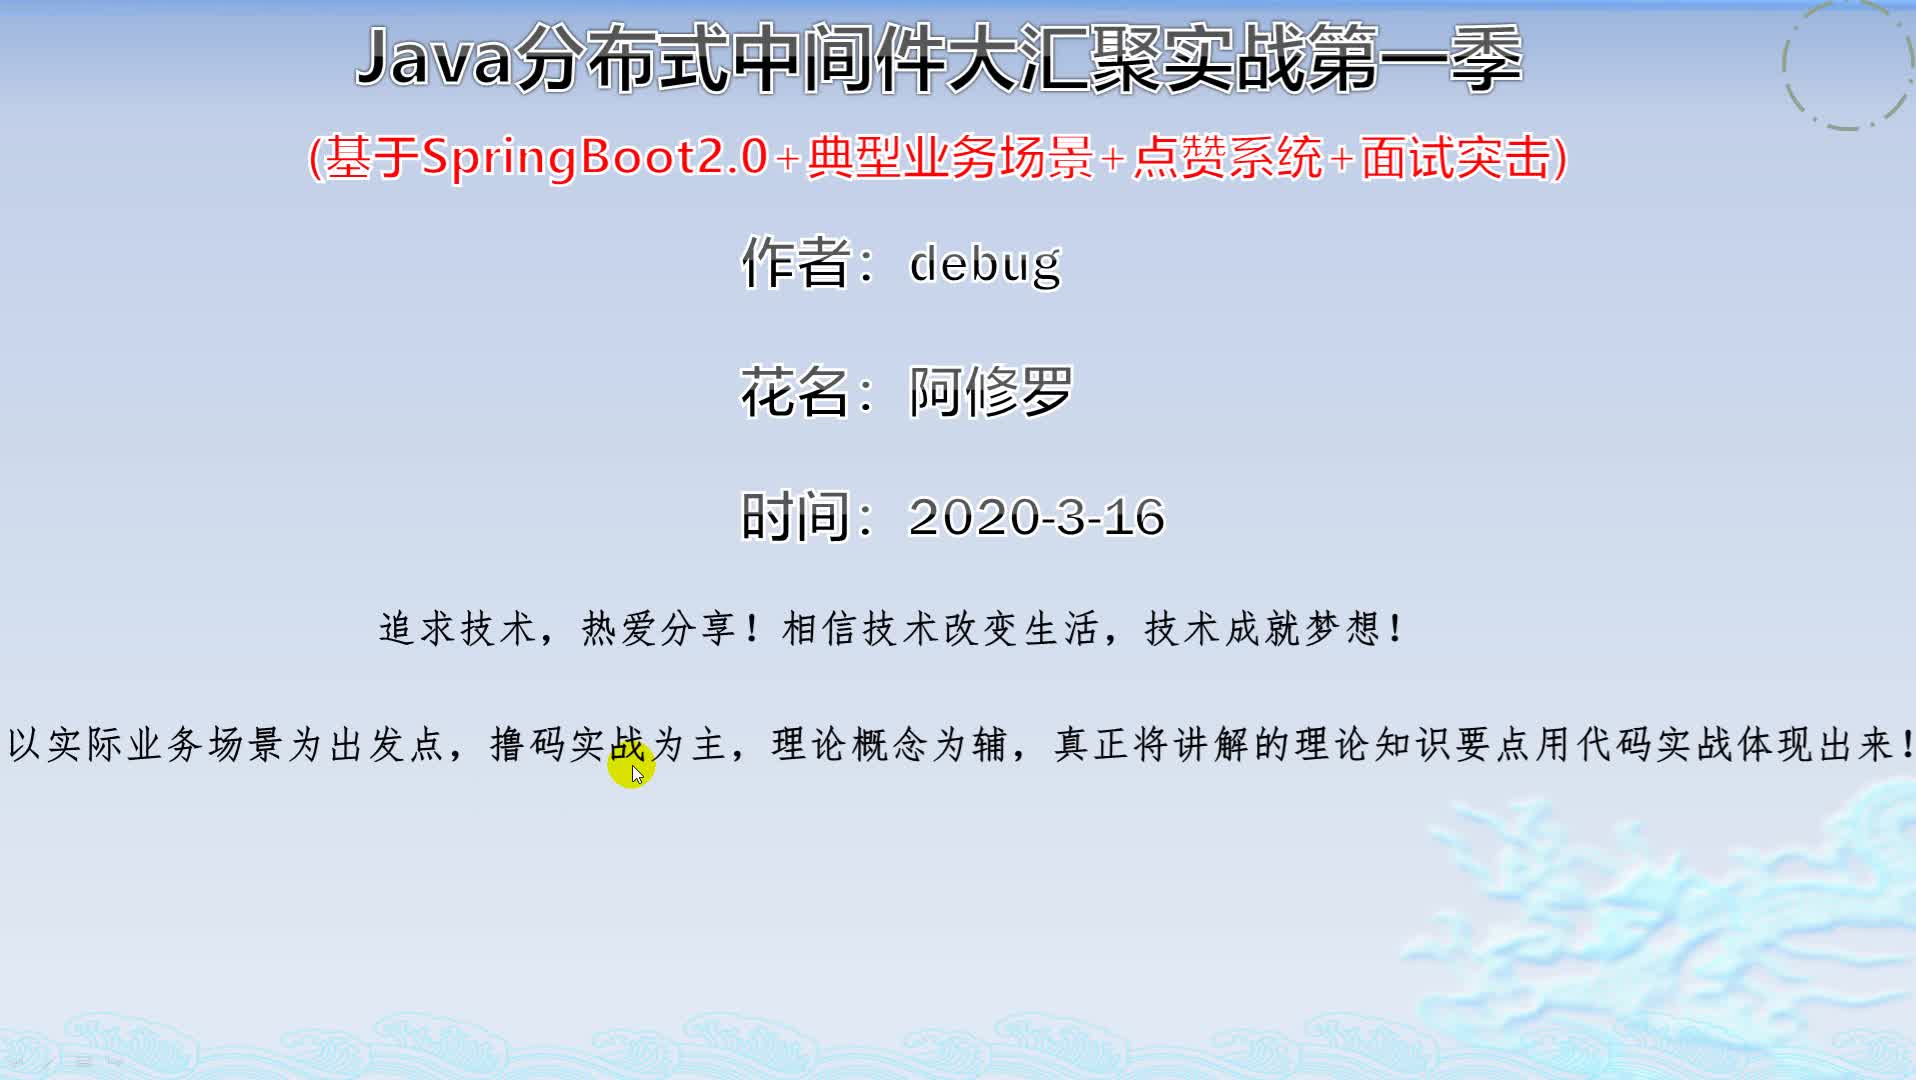 Java分布式中间件大汇聚实战第一季 (SpringBoot2.0+应用案例+点赞系统+面试突击)